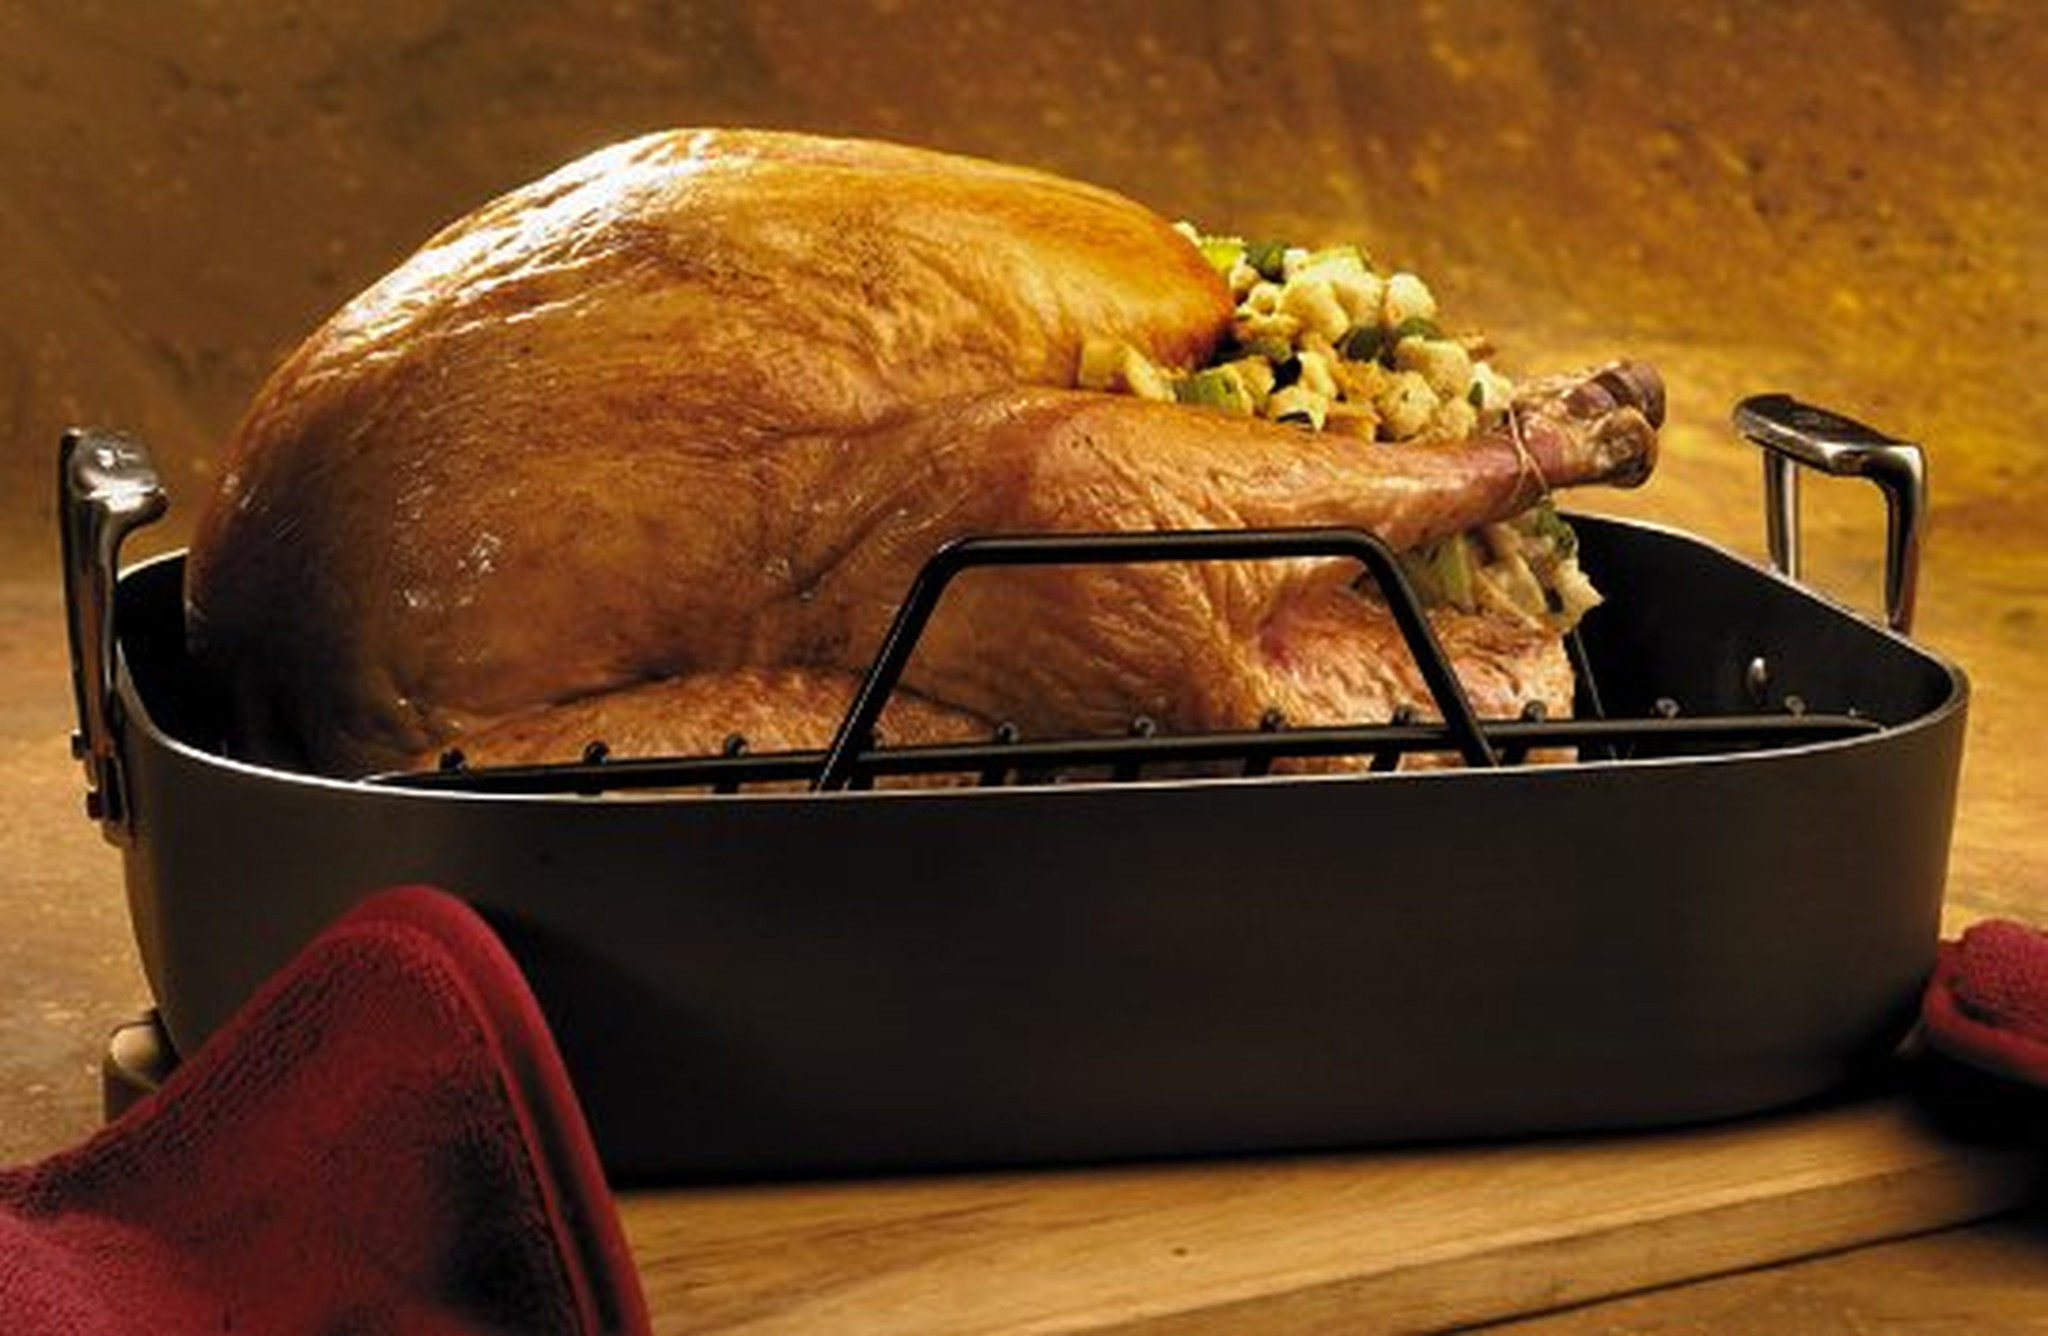 Turkey Hotline Thanksgiving
 10 weirdest turkey questions posed to Butterball hotline